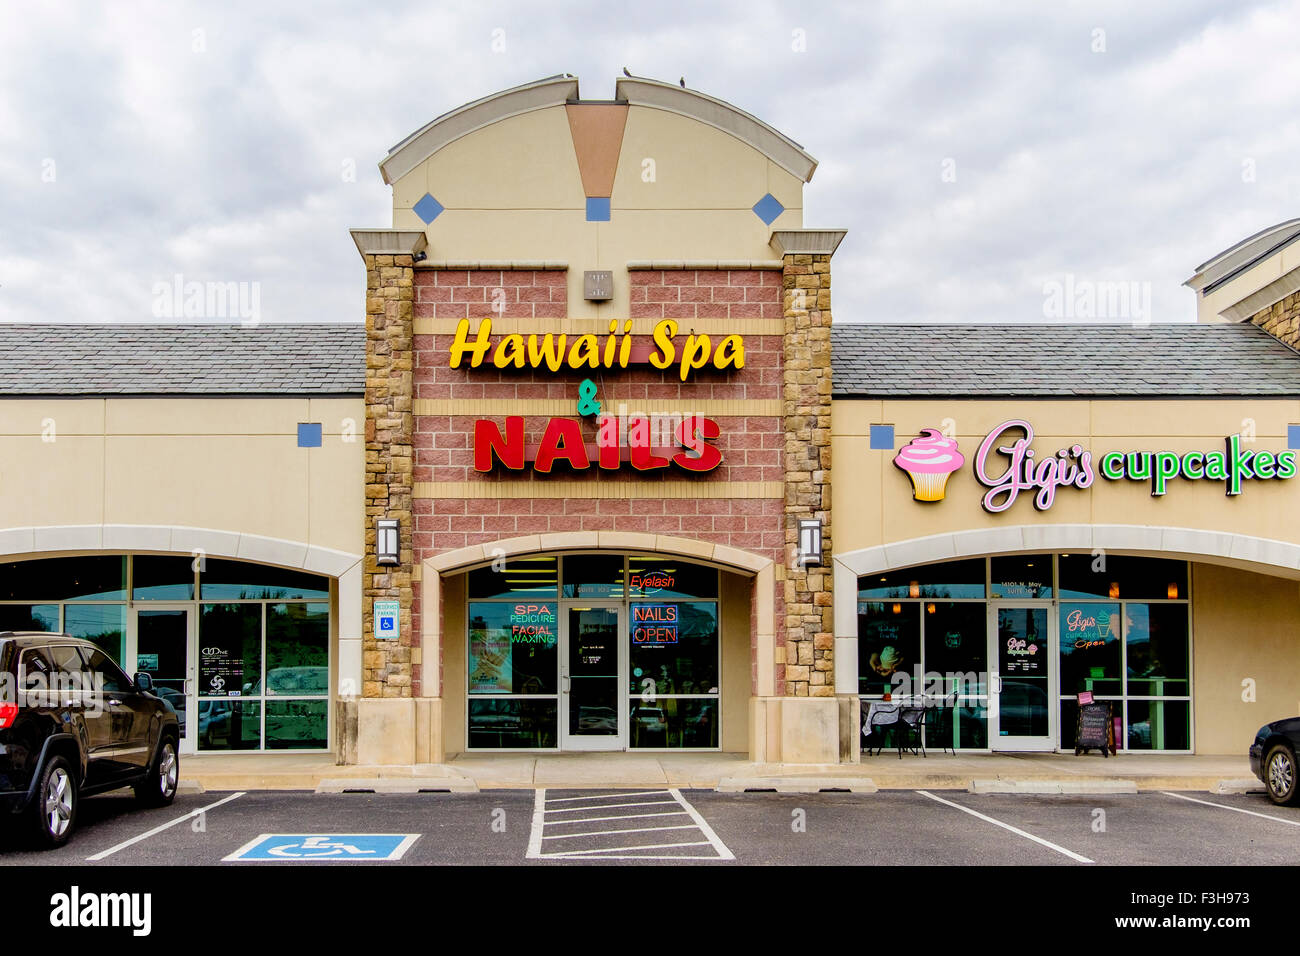 Hawaii Spa Nail salon and Gigi's cupcakes store exteriors in a strip mall in Oklahoma City, Oklahoma, USA. Stock Photo